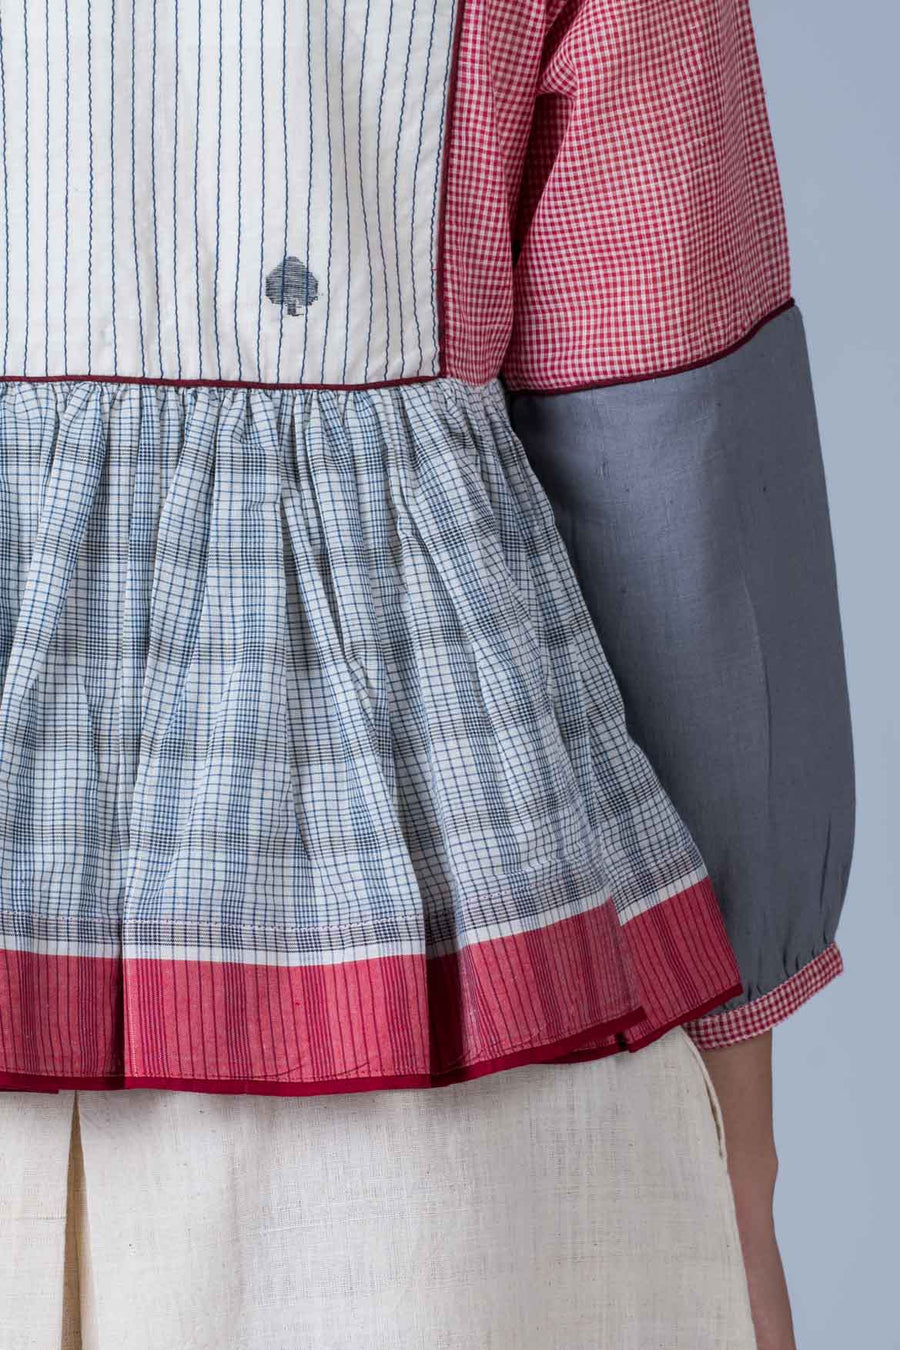 Grey and Pink Composed Organic cotton Jacket Top - KEDIYA - Upasana Design Studio